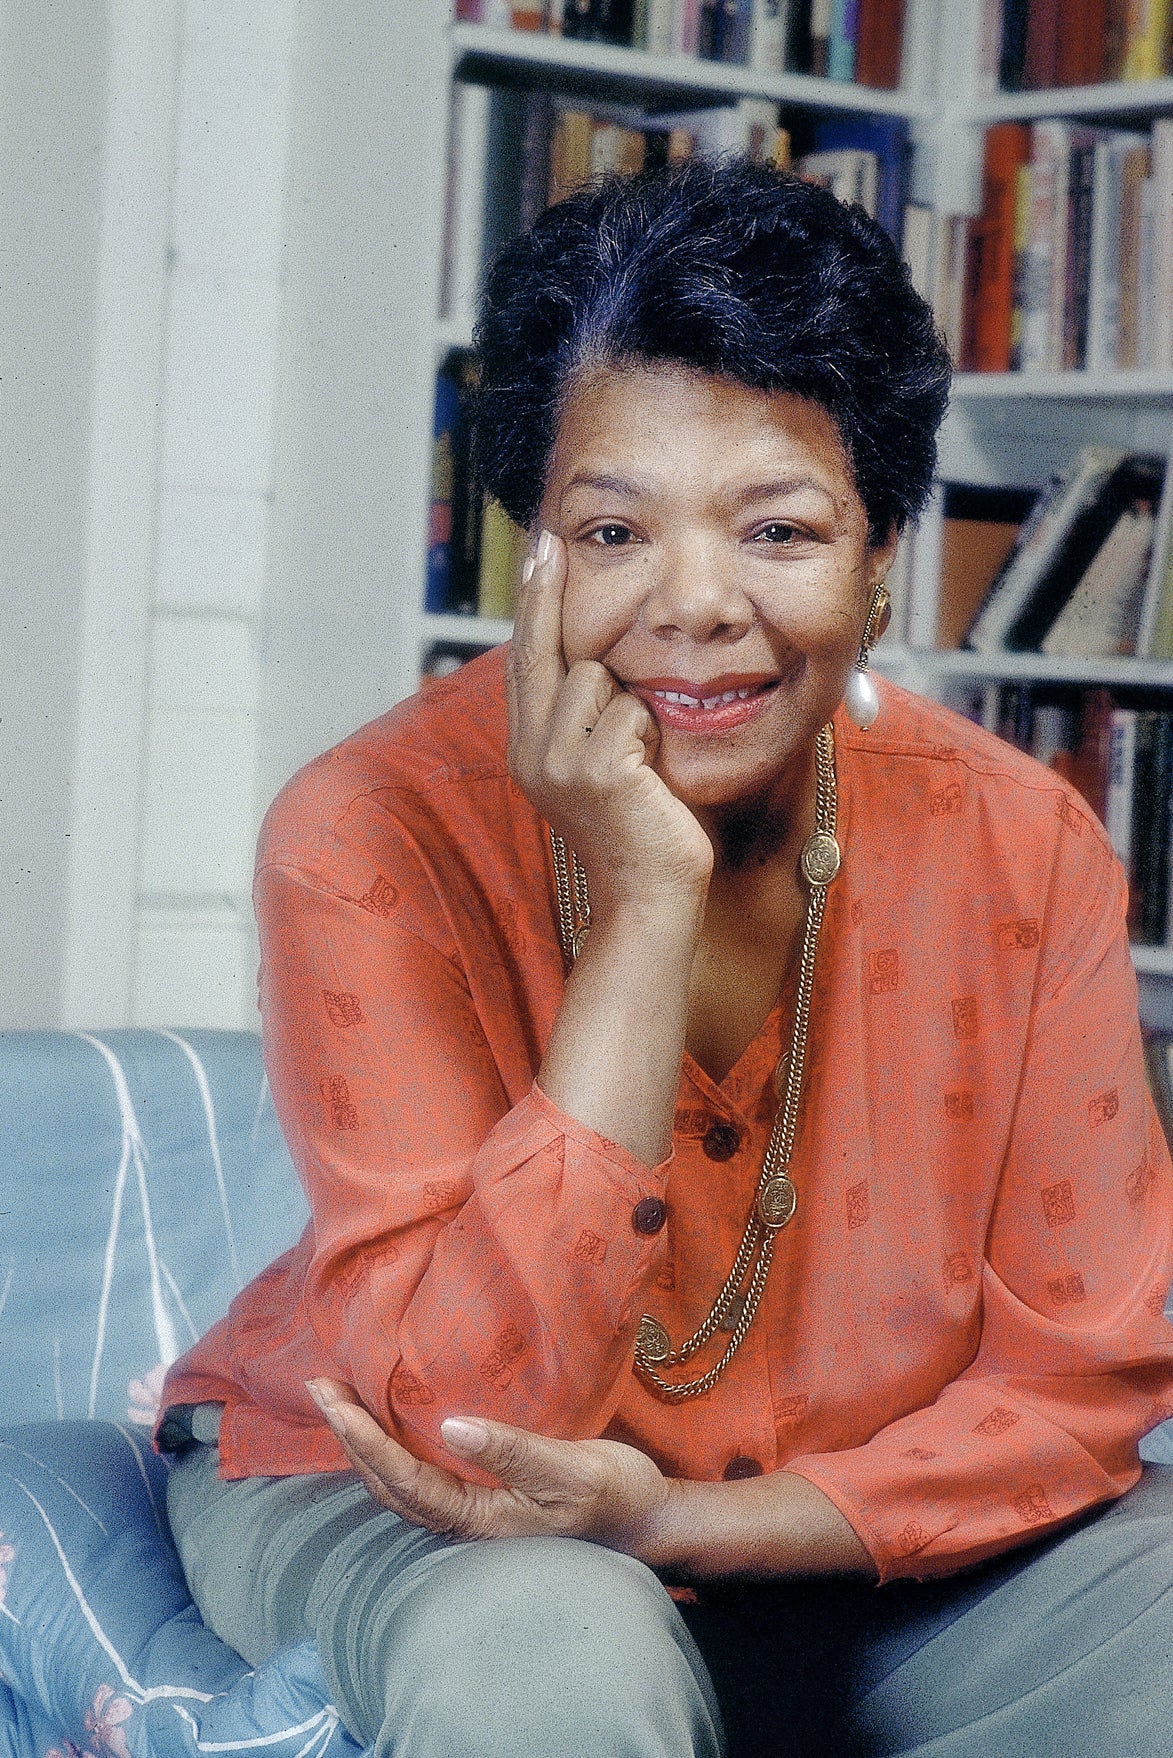 Maya Angelou's Estate Releases Posthumous Album of Her Poetry